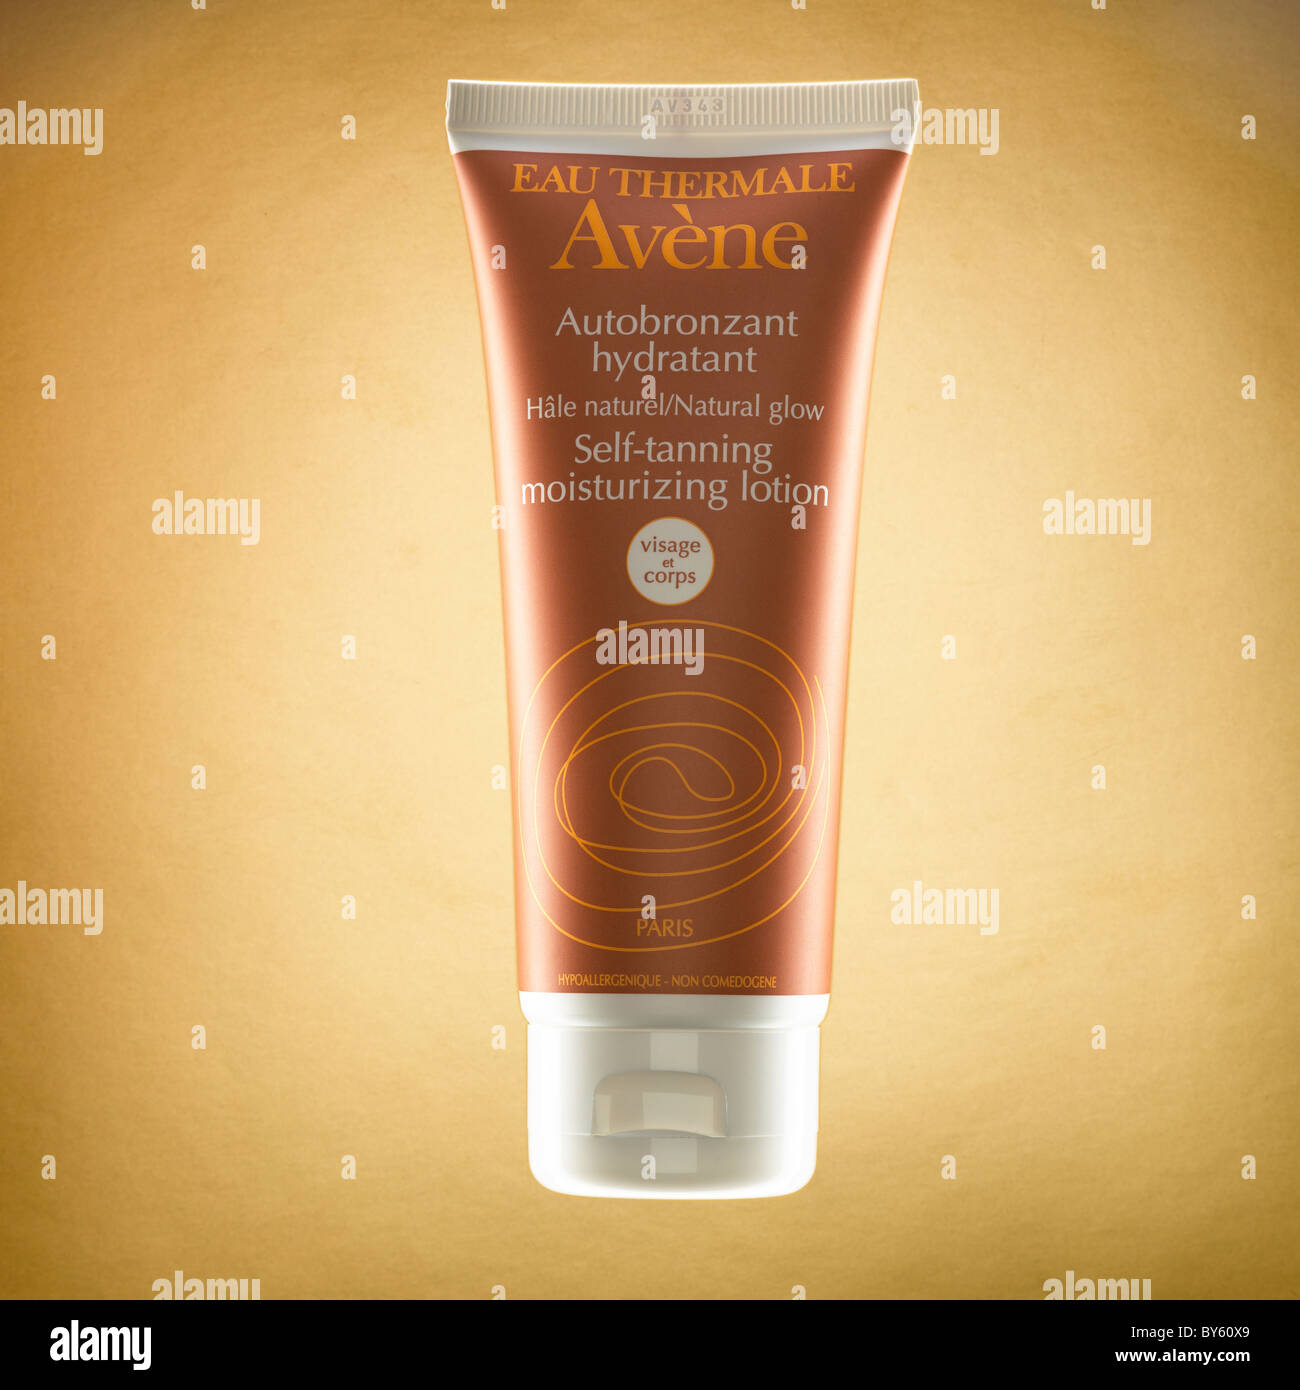 Eau Thermale Avene self tanning moisturizing Stock Photo